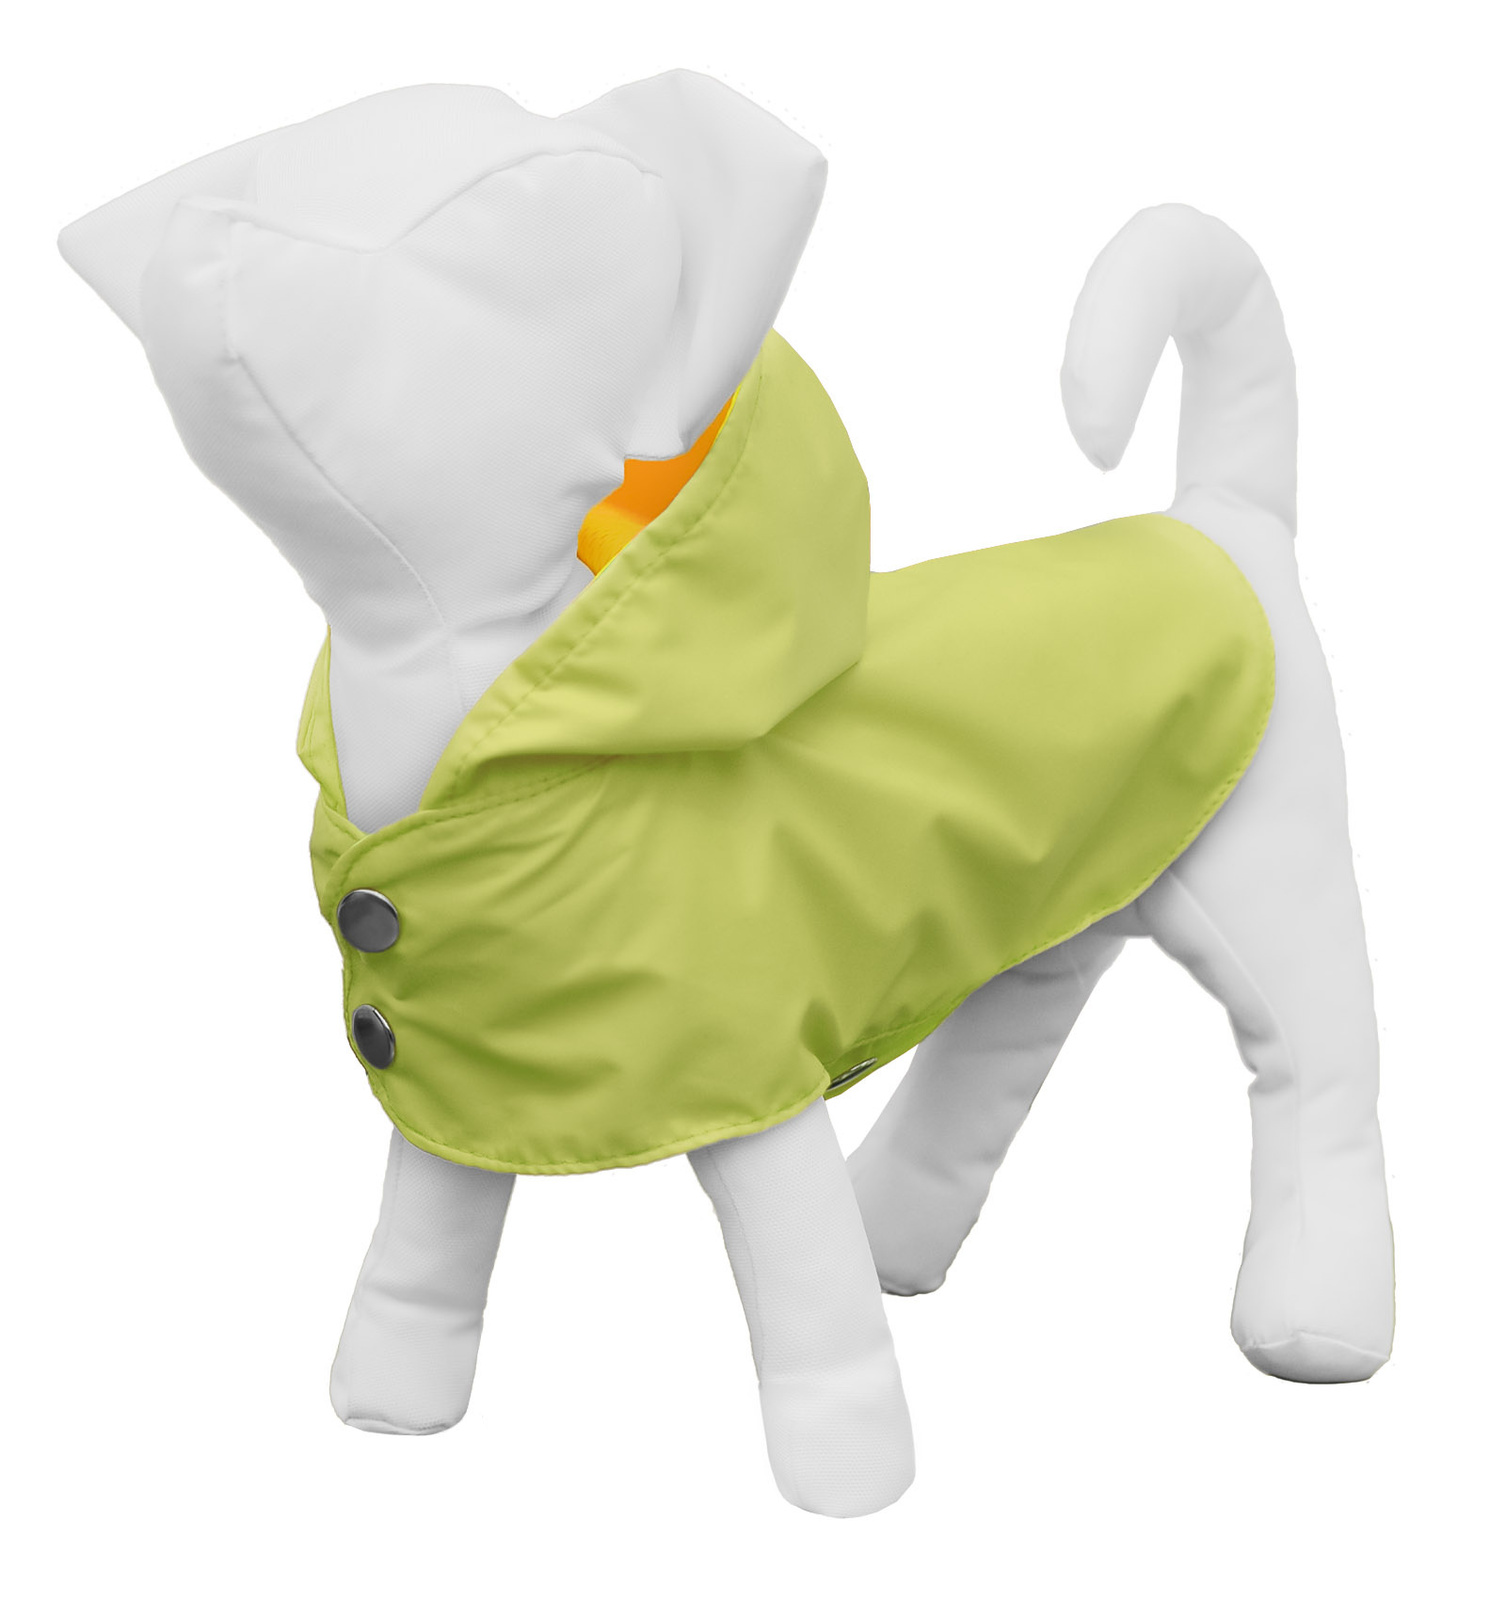 Yami-Yami одежда дождевик-плащ для собак, салатовый (S) Yami-Yami одежда дождевик-плащ для собак, салатовый (S) - фото 1